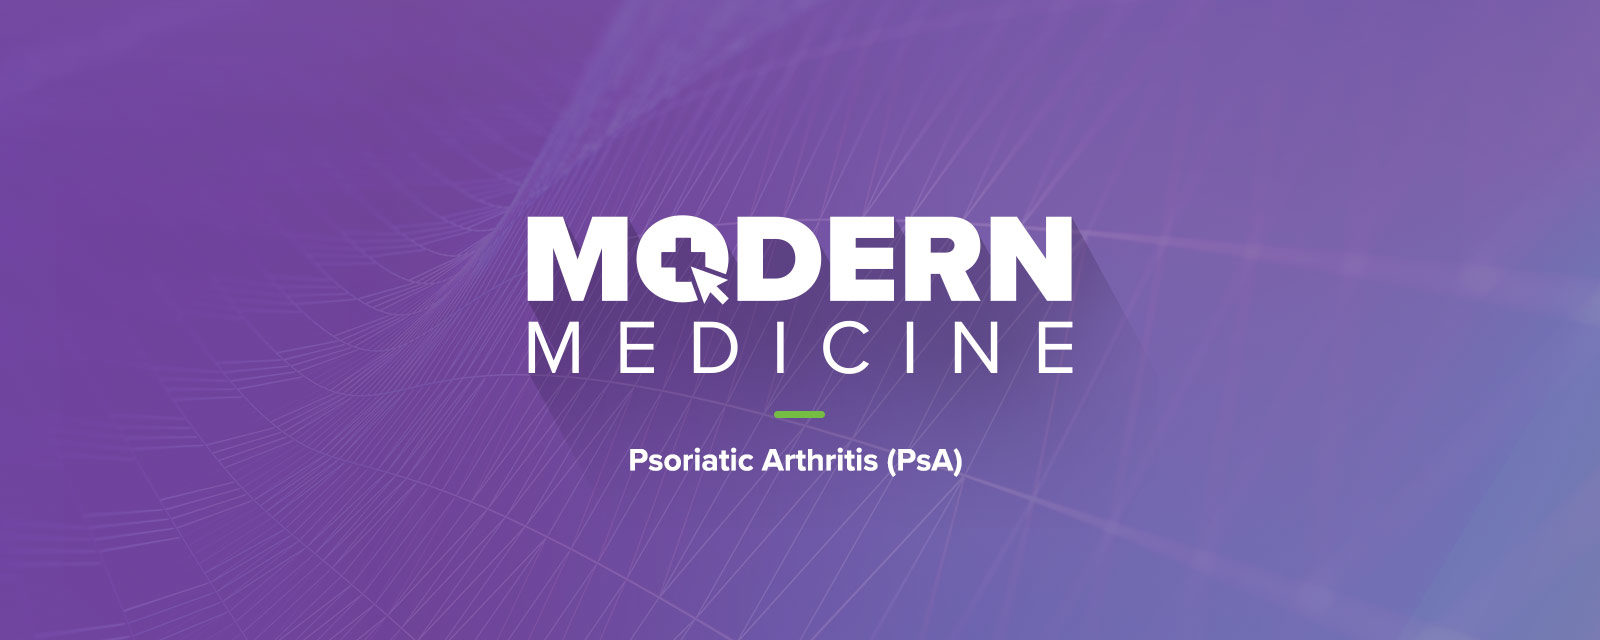 Modern Medicine: PsA